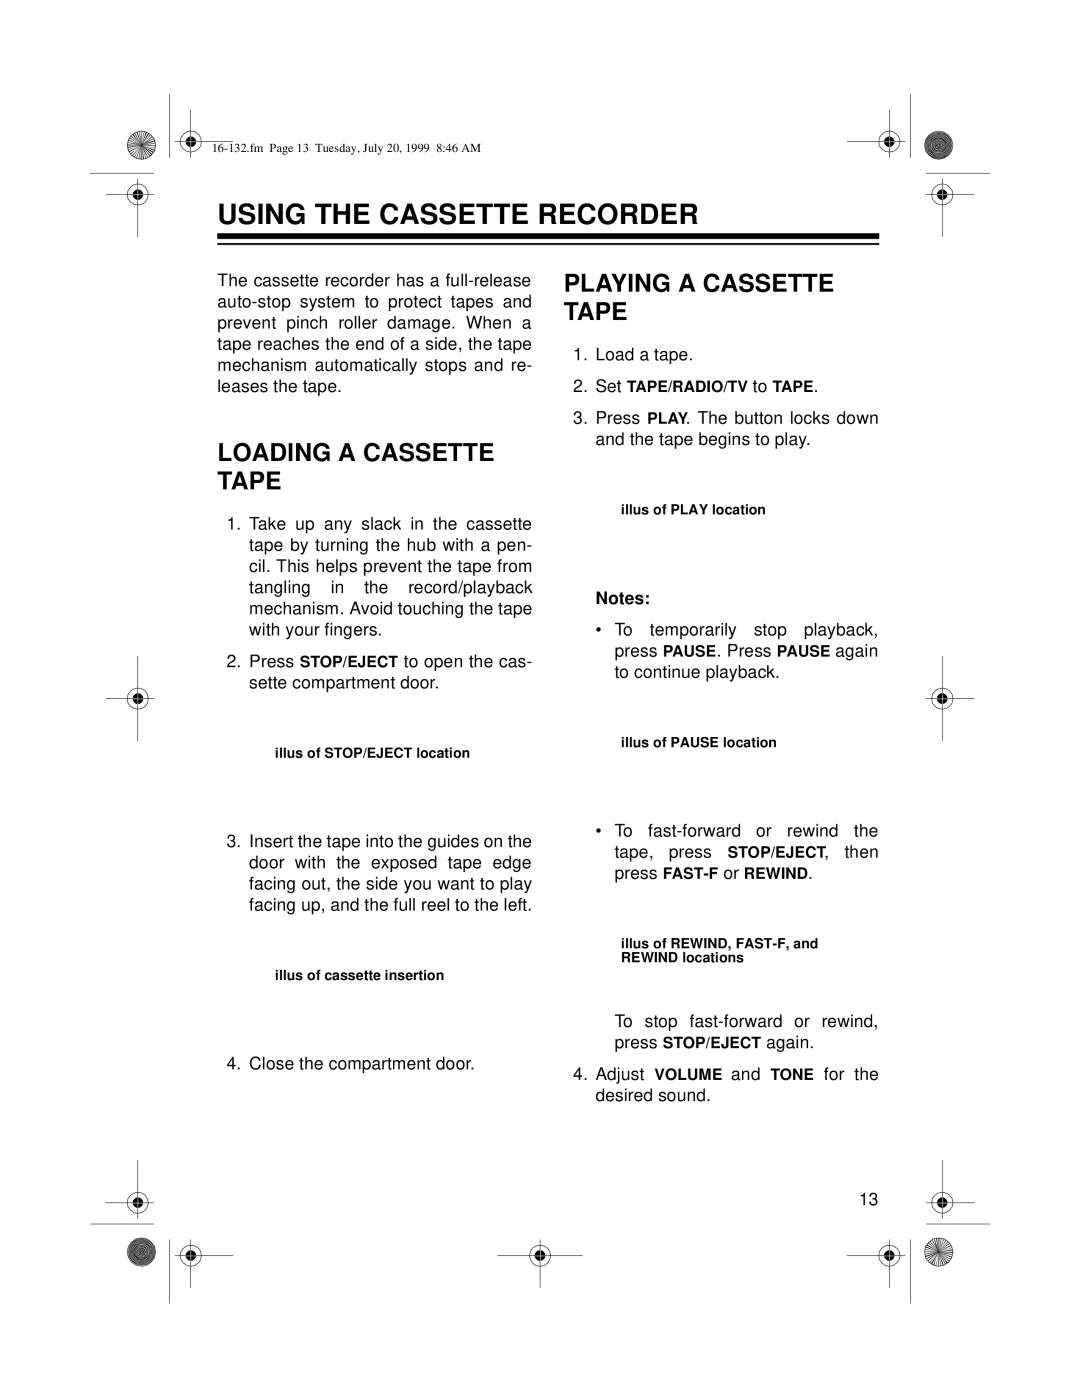 Optimus 16-132 owner manual Using The Cassette Recorder, Loading A Cassette Tape, Playing A Cassette Tape 